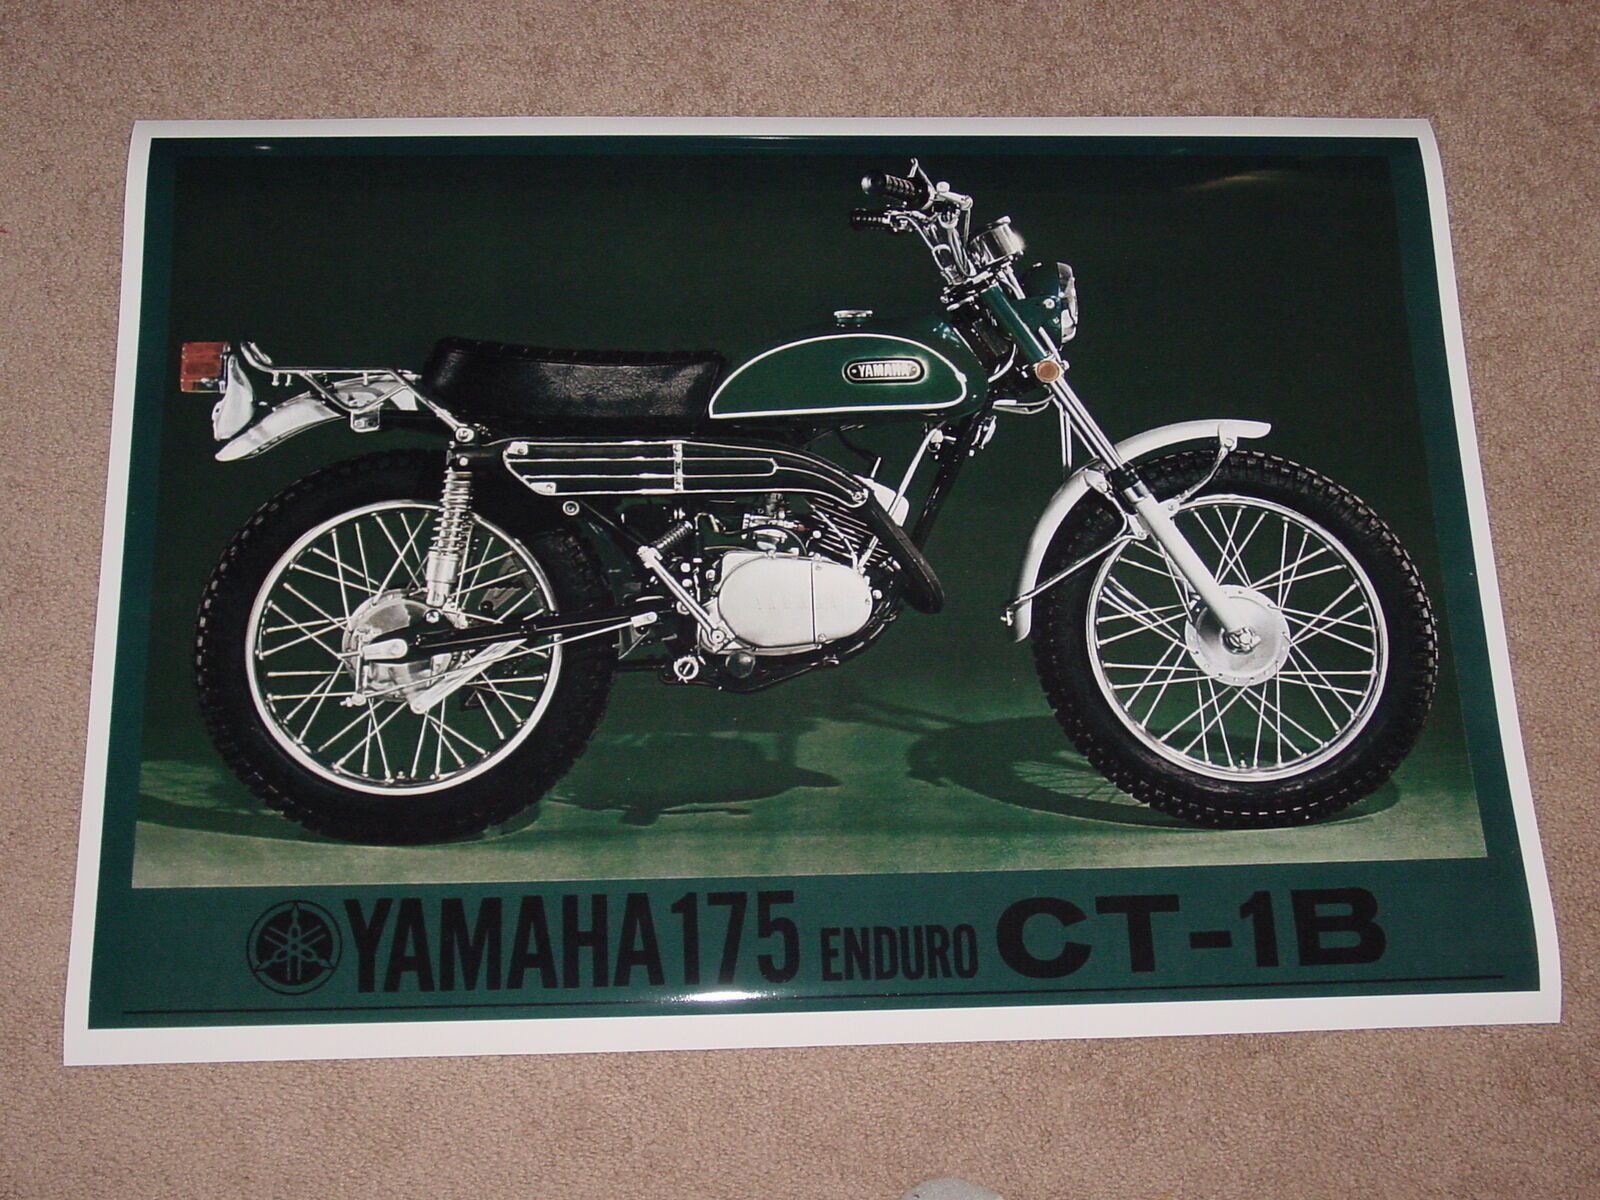 1970 YAMAHA CT1 CT1-B VINTAGE MOTORCYCLE AD POSTER PRINT 25x36 9MIL PAPER